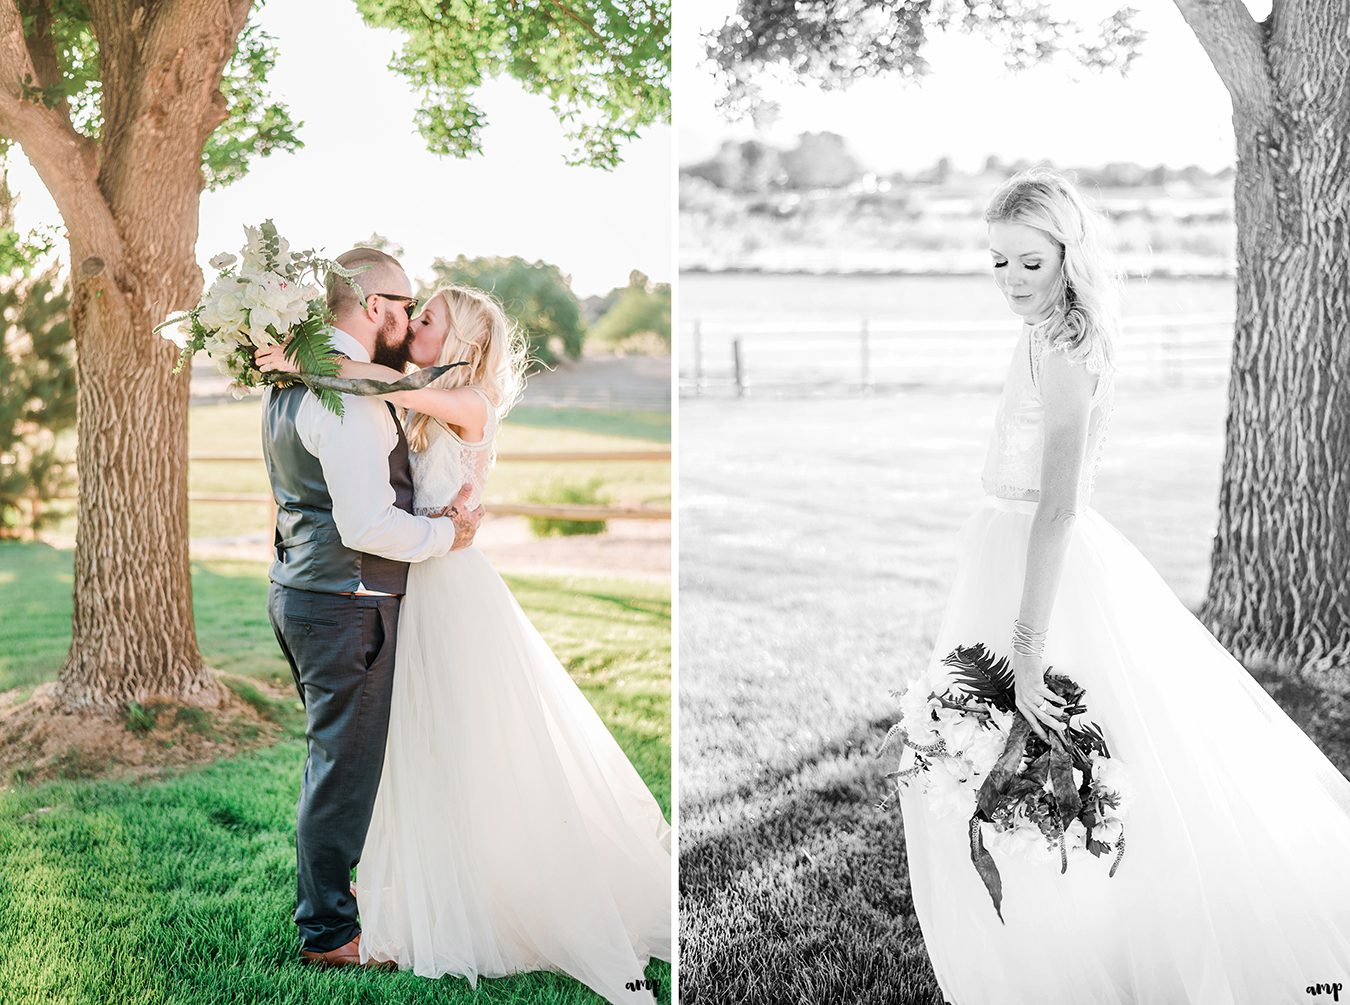 Beth and Dustin kissing under the tree | Grand Junction Backyard Wedding | amanda.matilda.photography